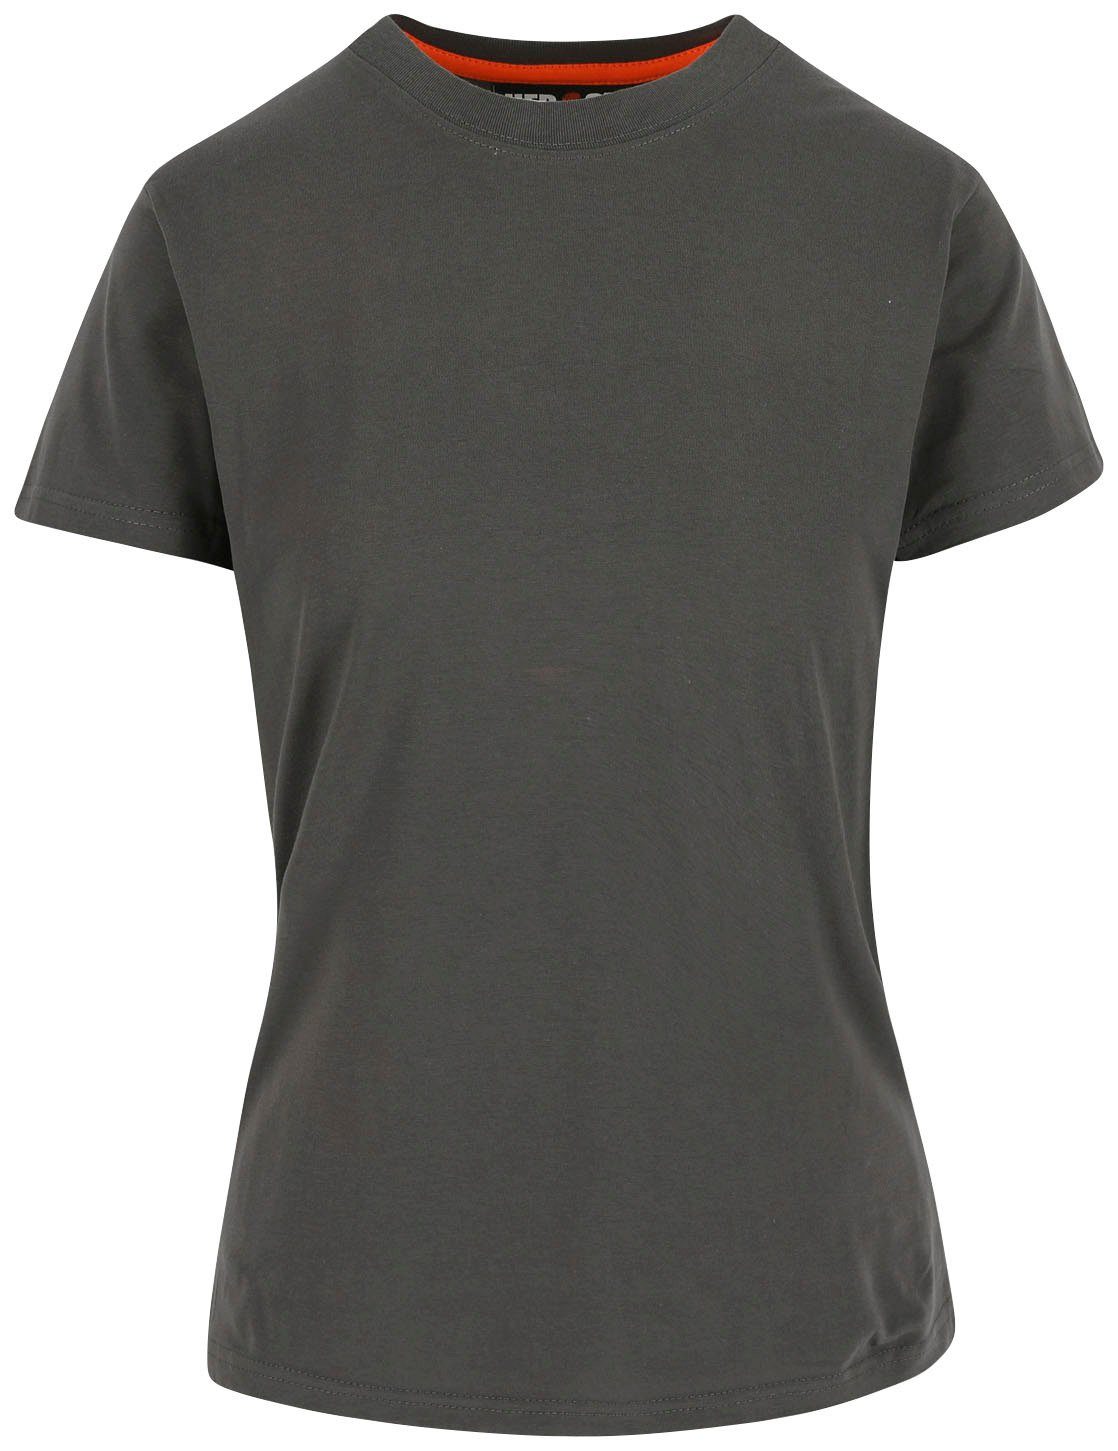 Herock T-Shirt Schlaufe, Epona T-Shirt hintere Tragegefühl Figurbetont, 1 Damen grau angenehmes Kurzärmlig